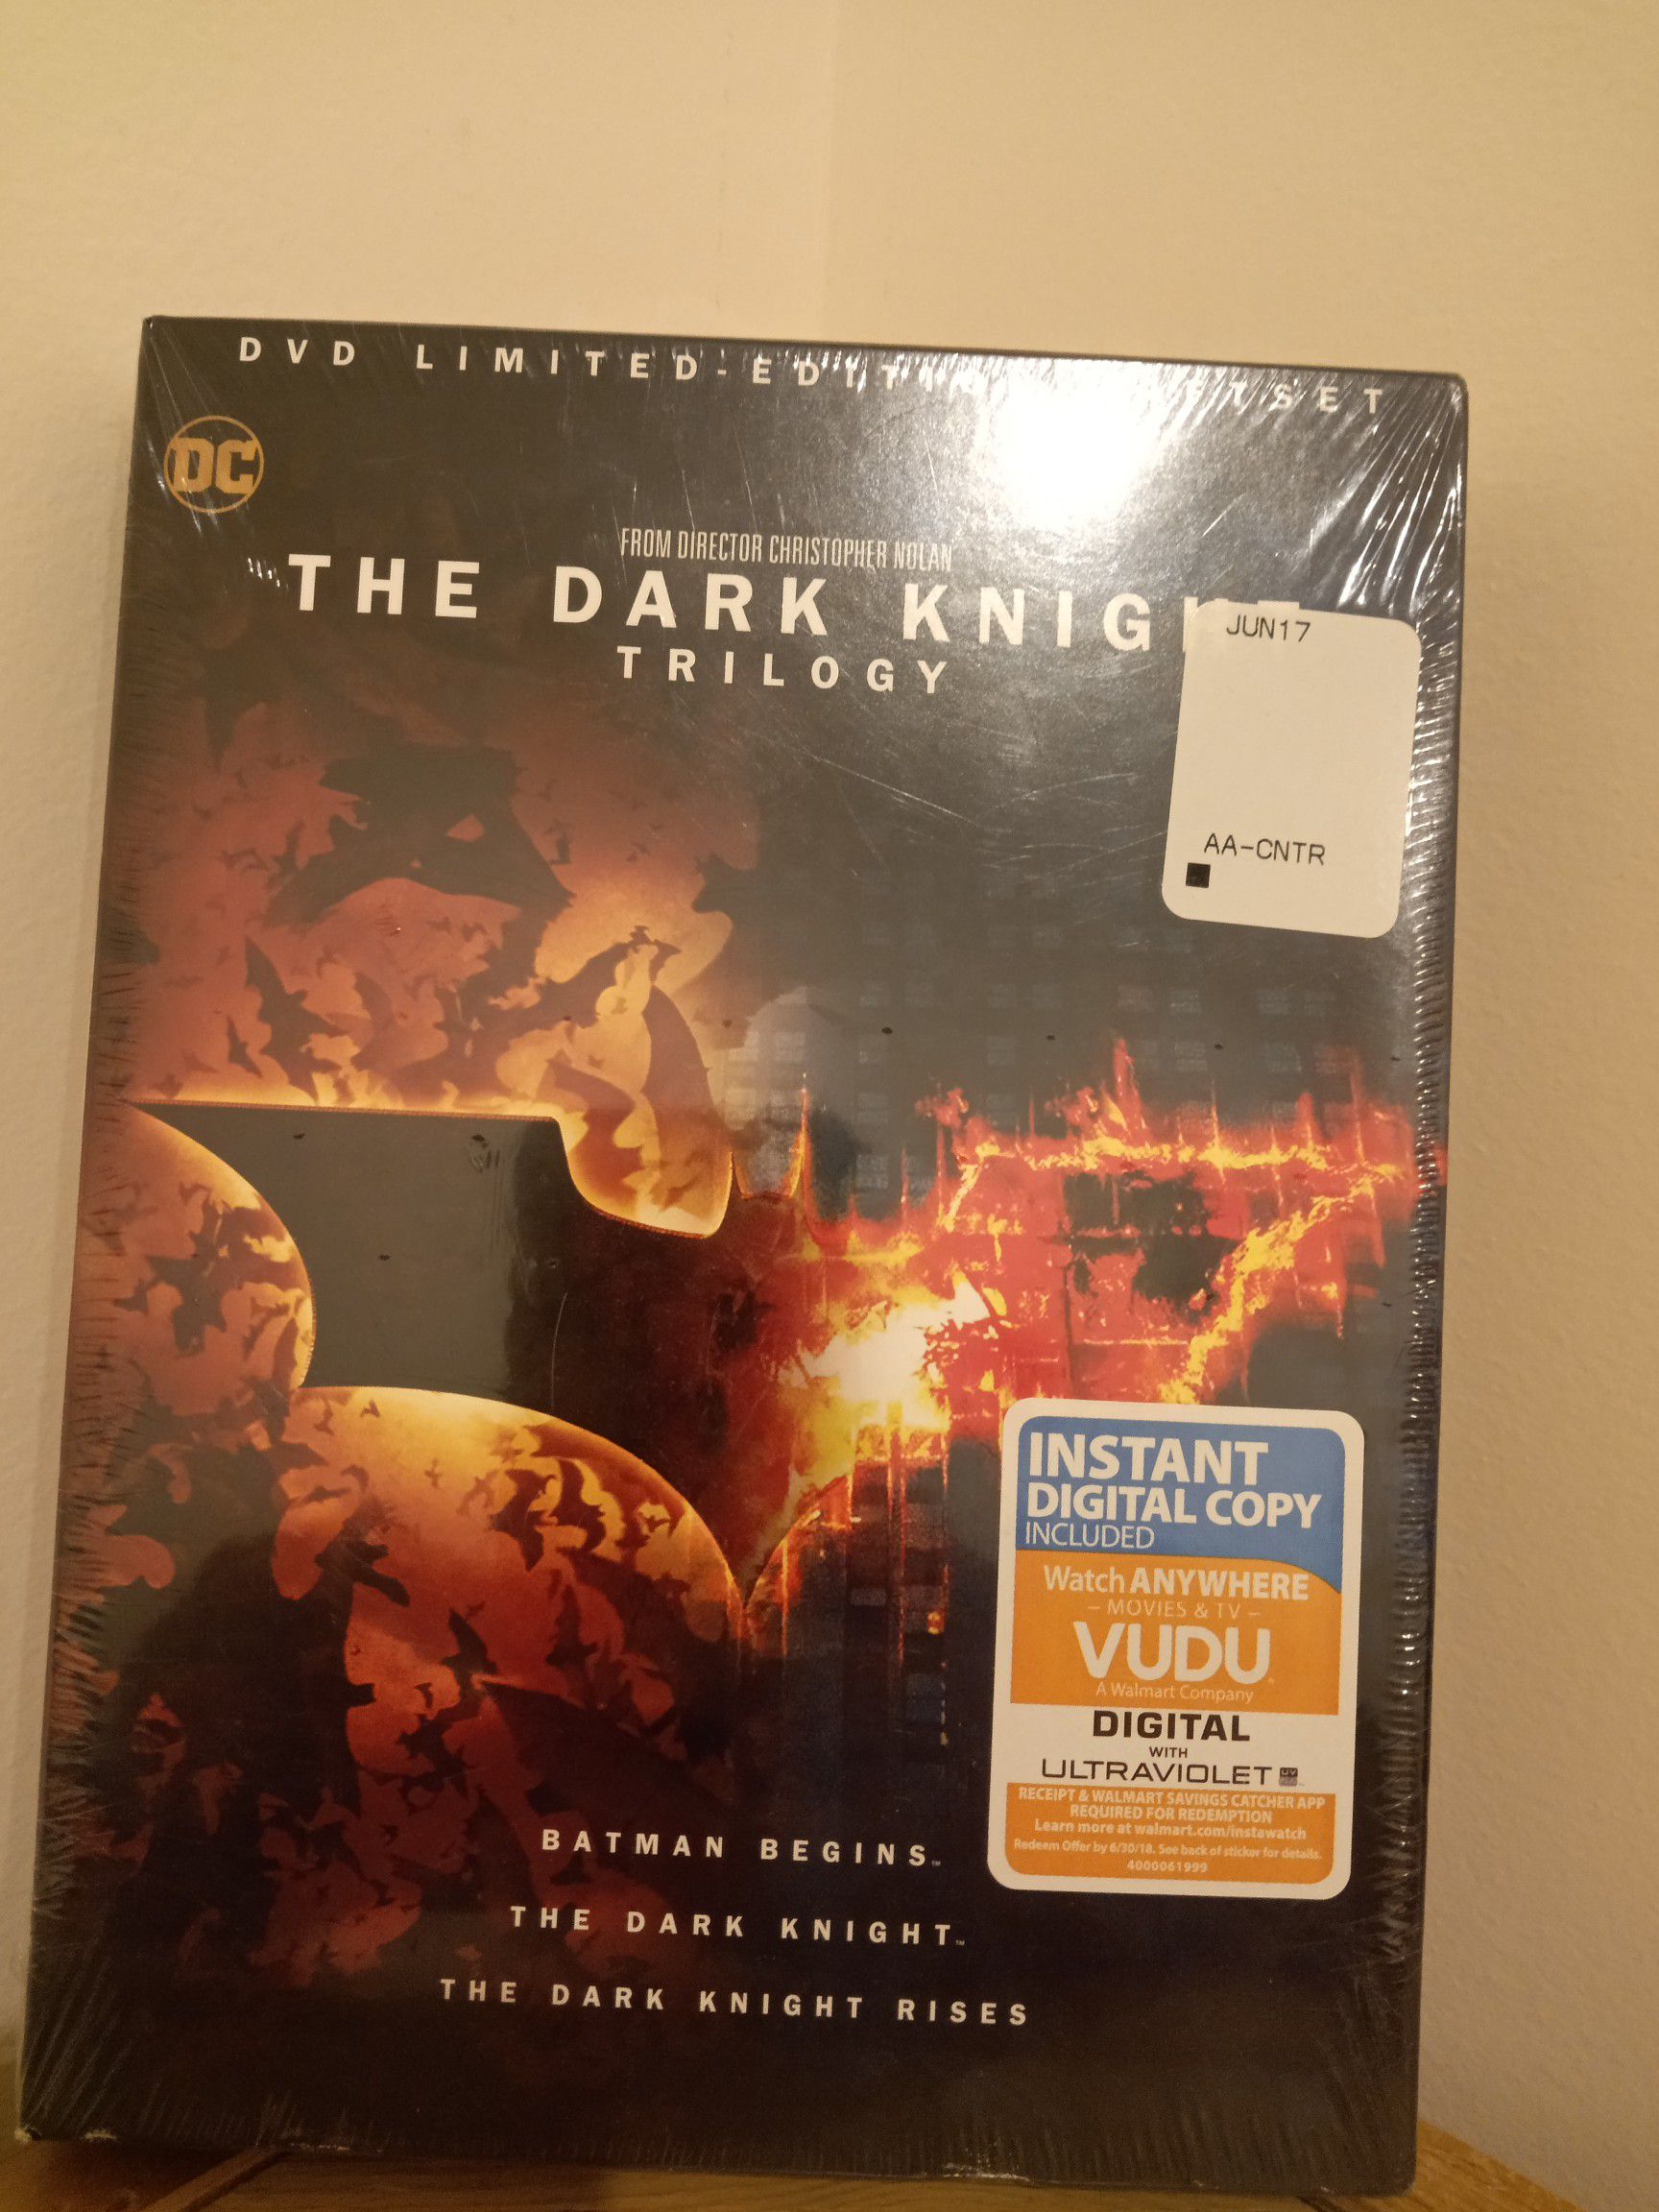 The Dark Knight Trilogy DVD set